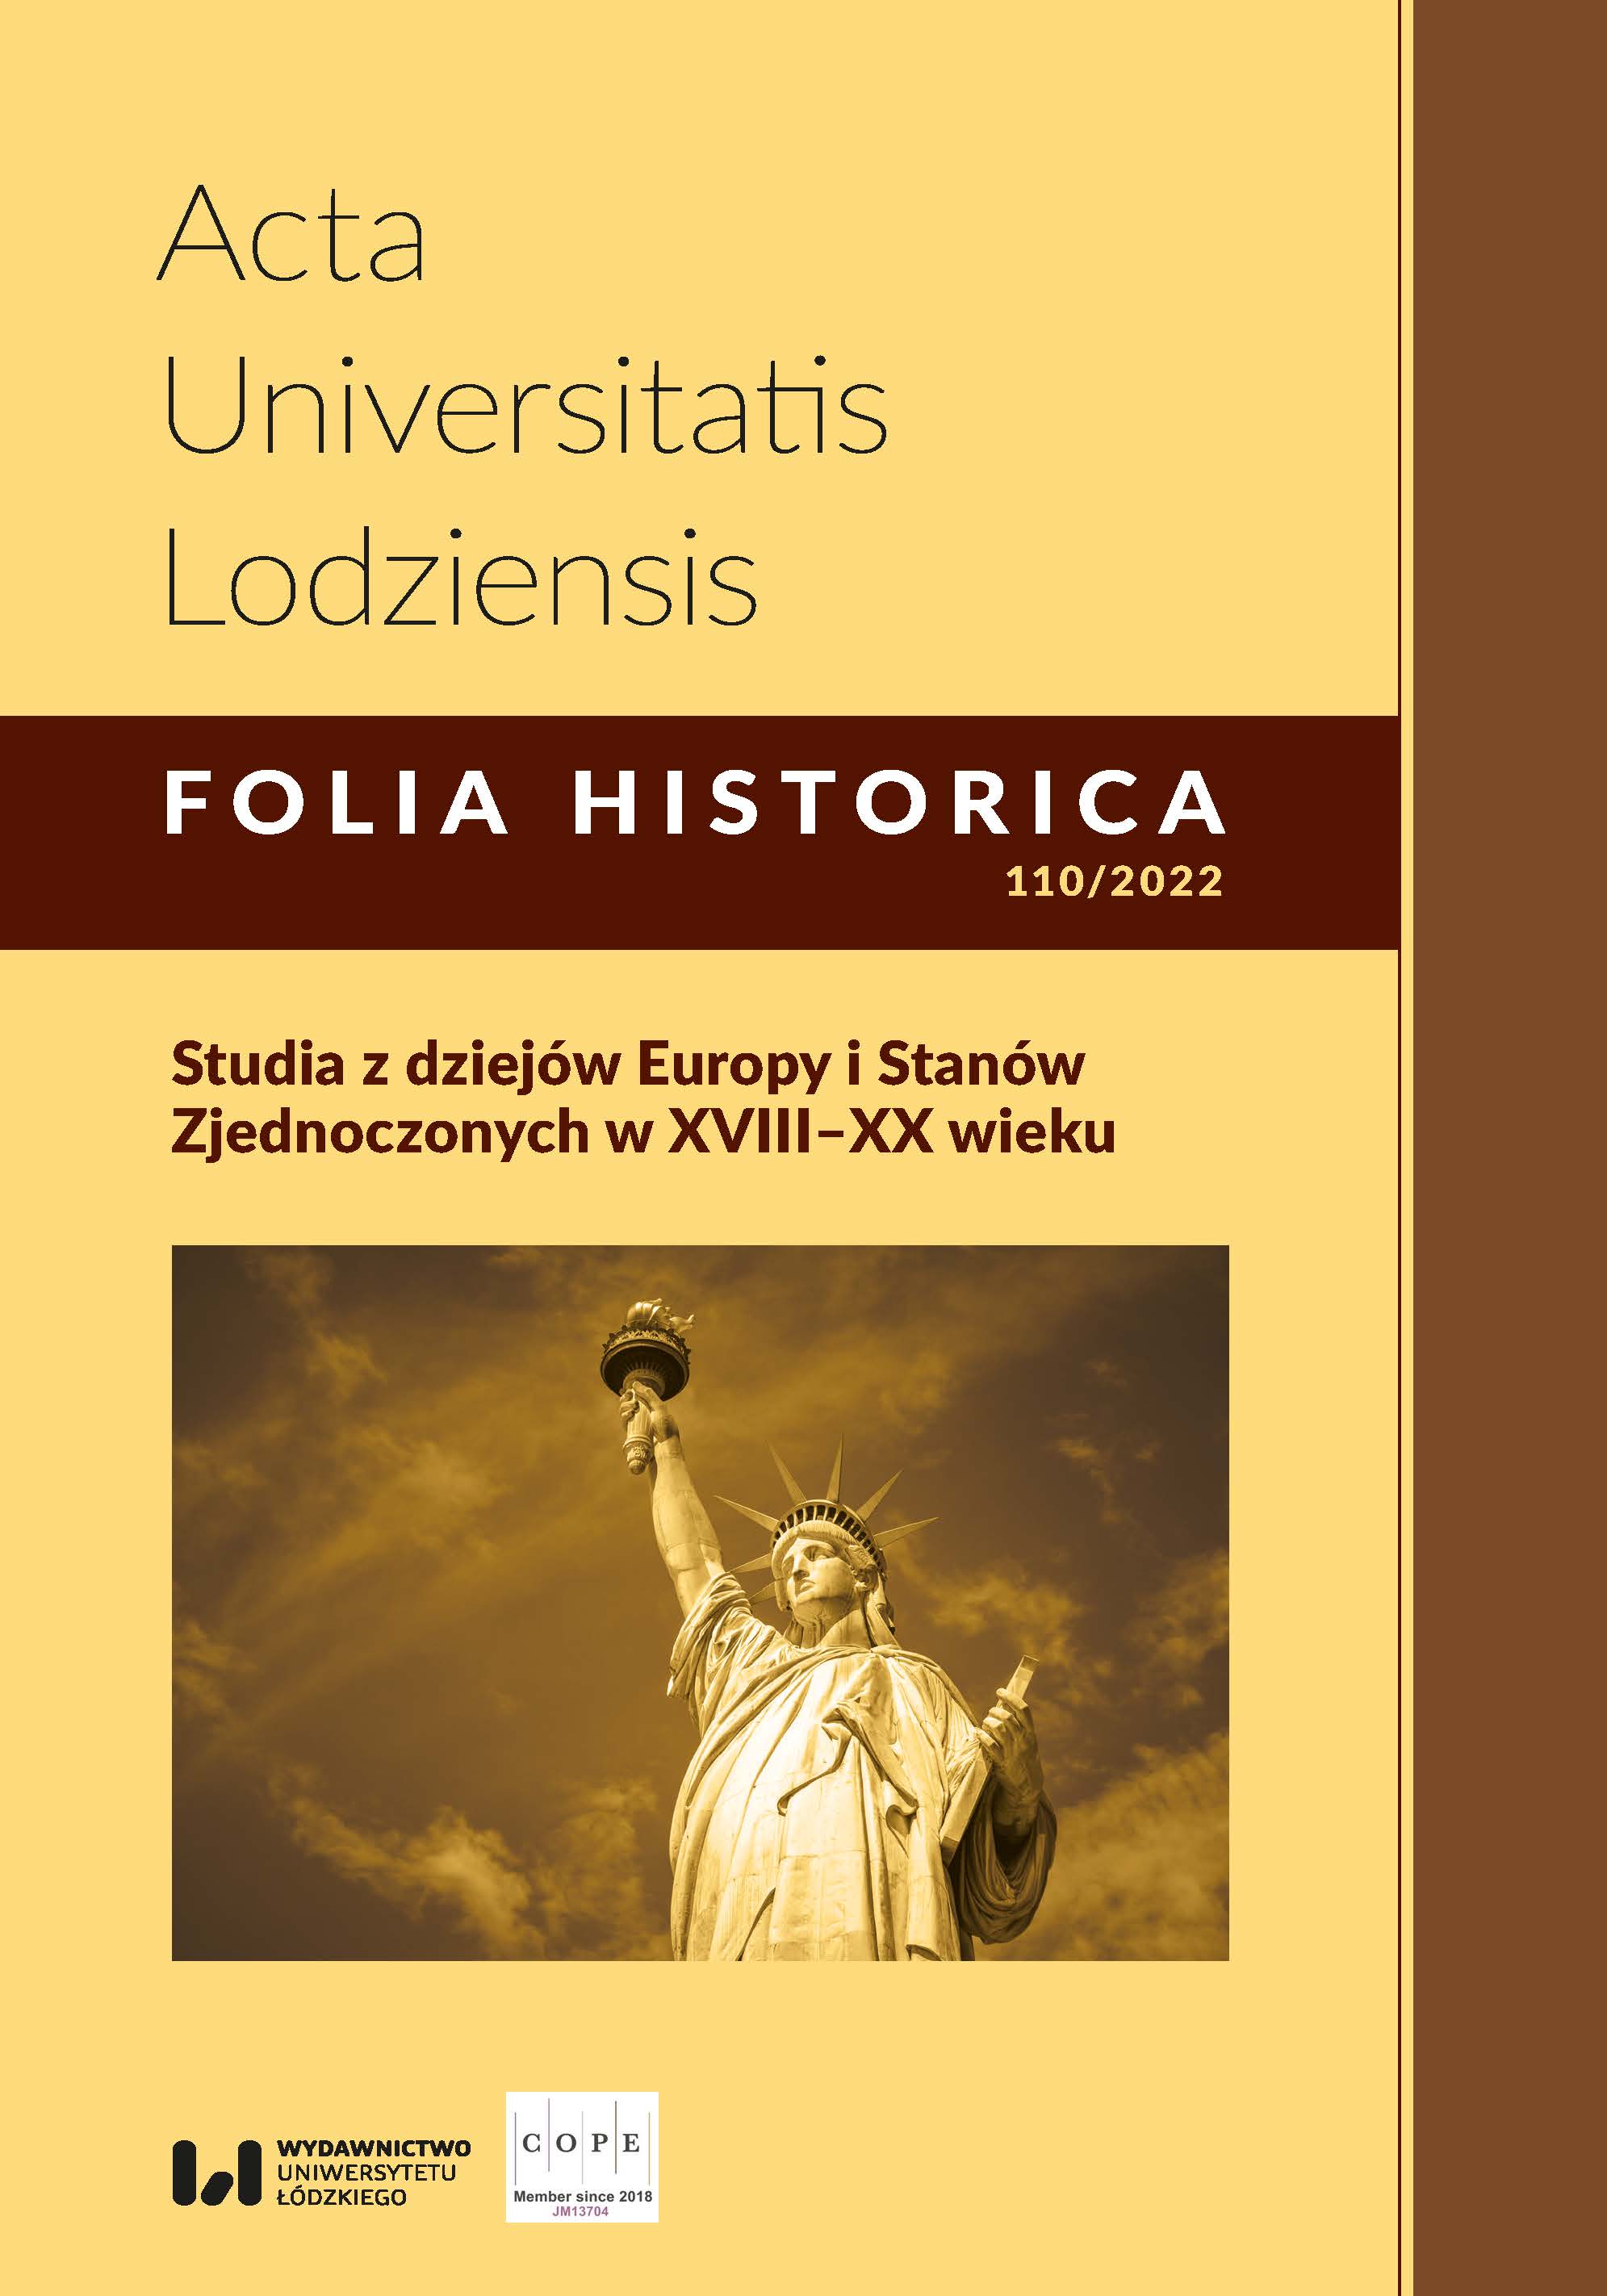 Profesor Jolanta A. Daszyńska – sylwetka badaczki Cover Image